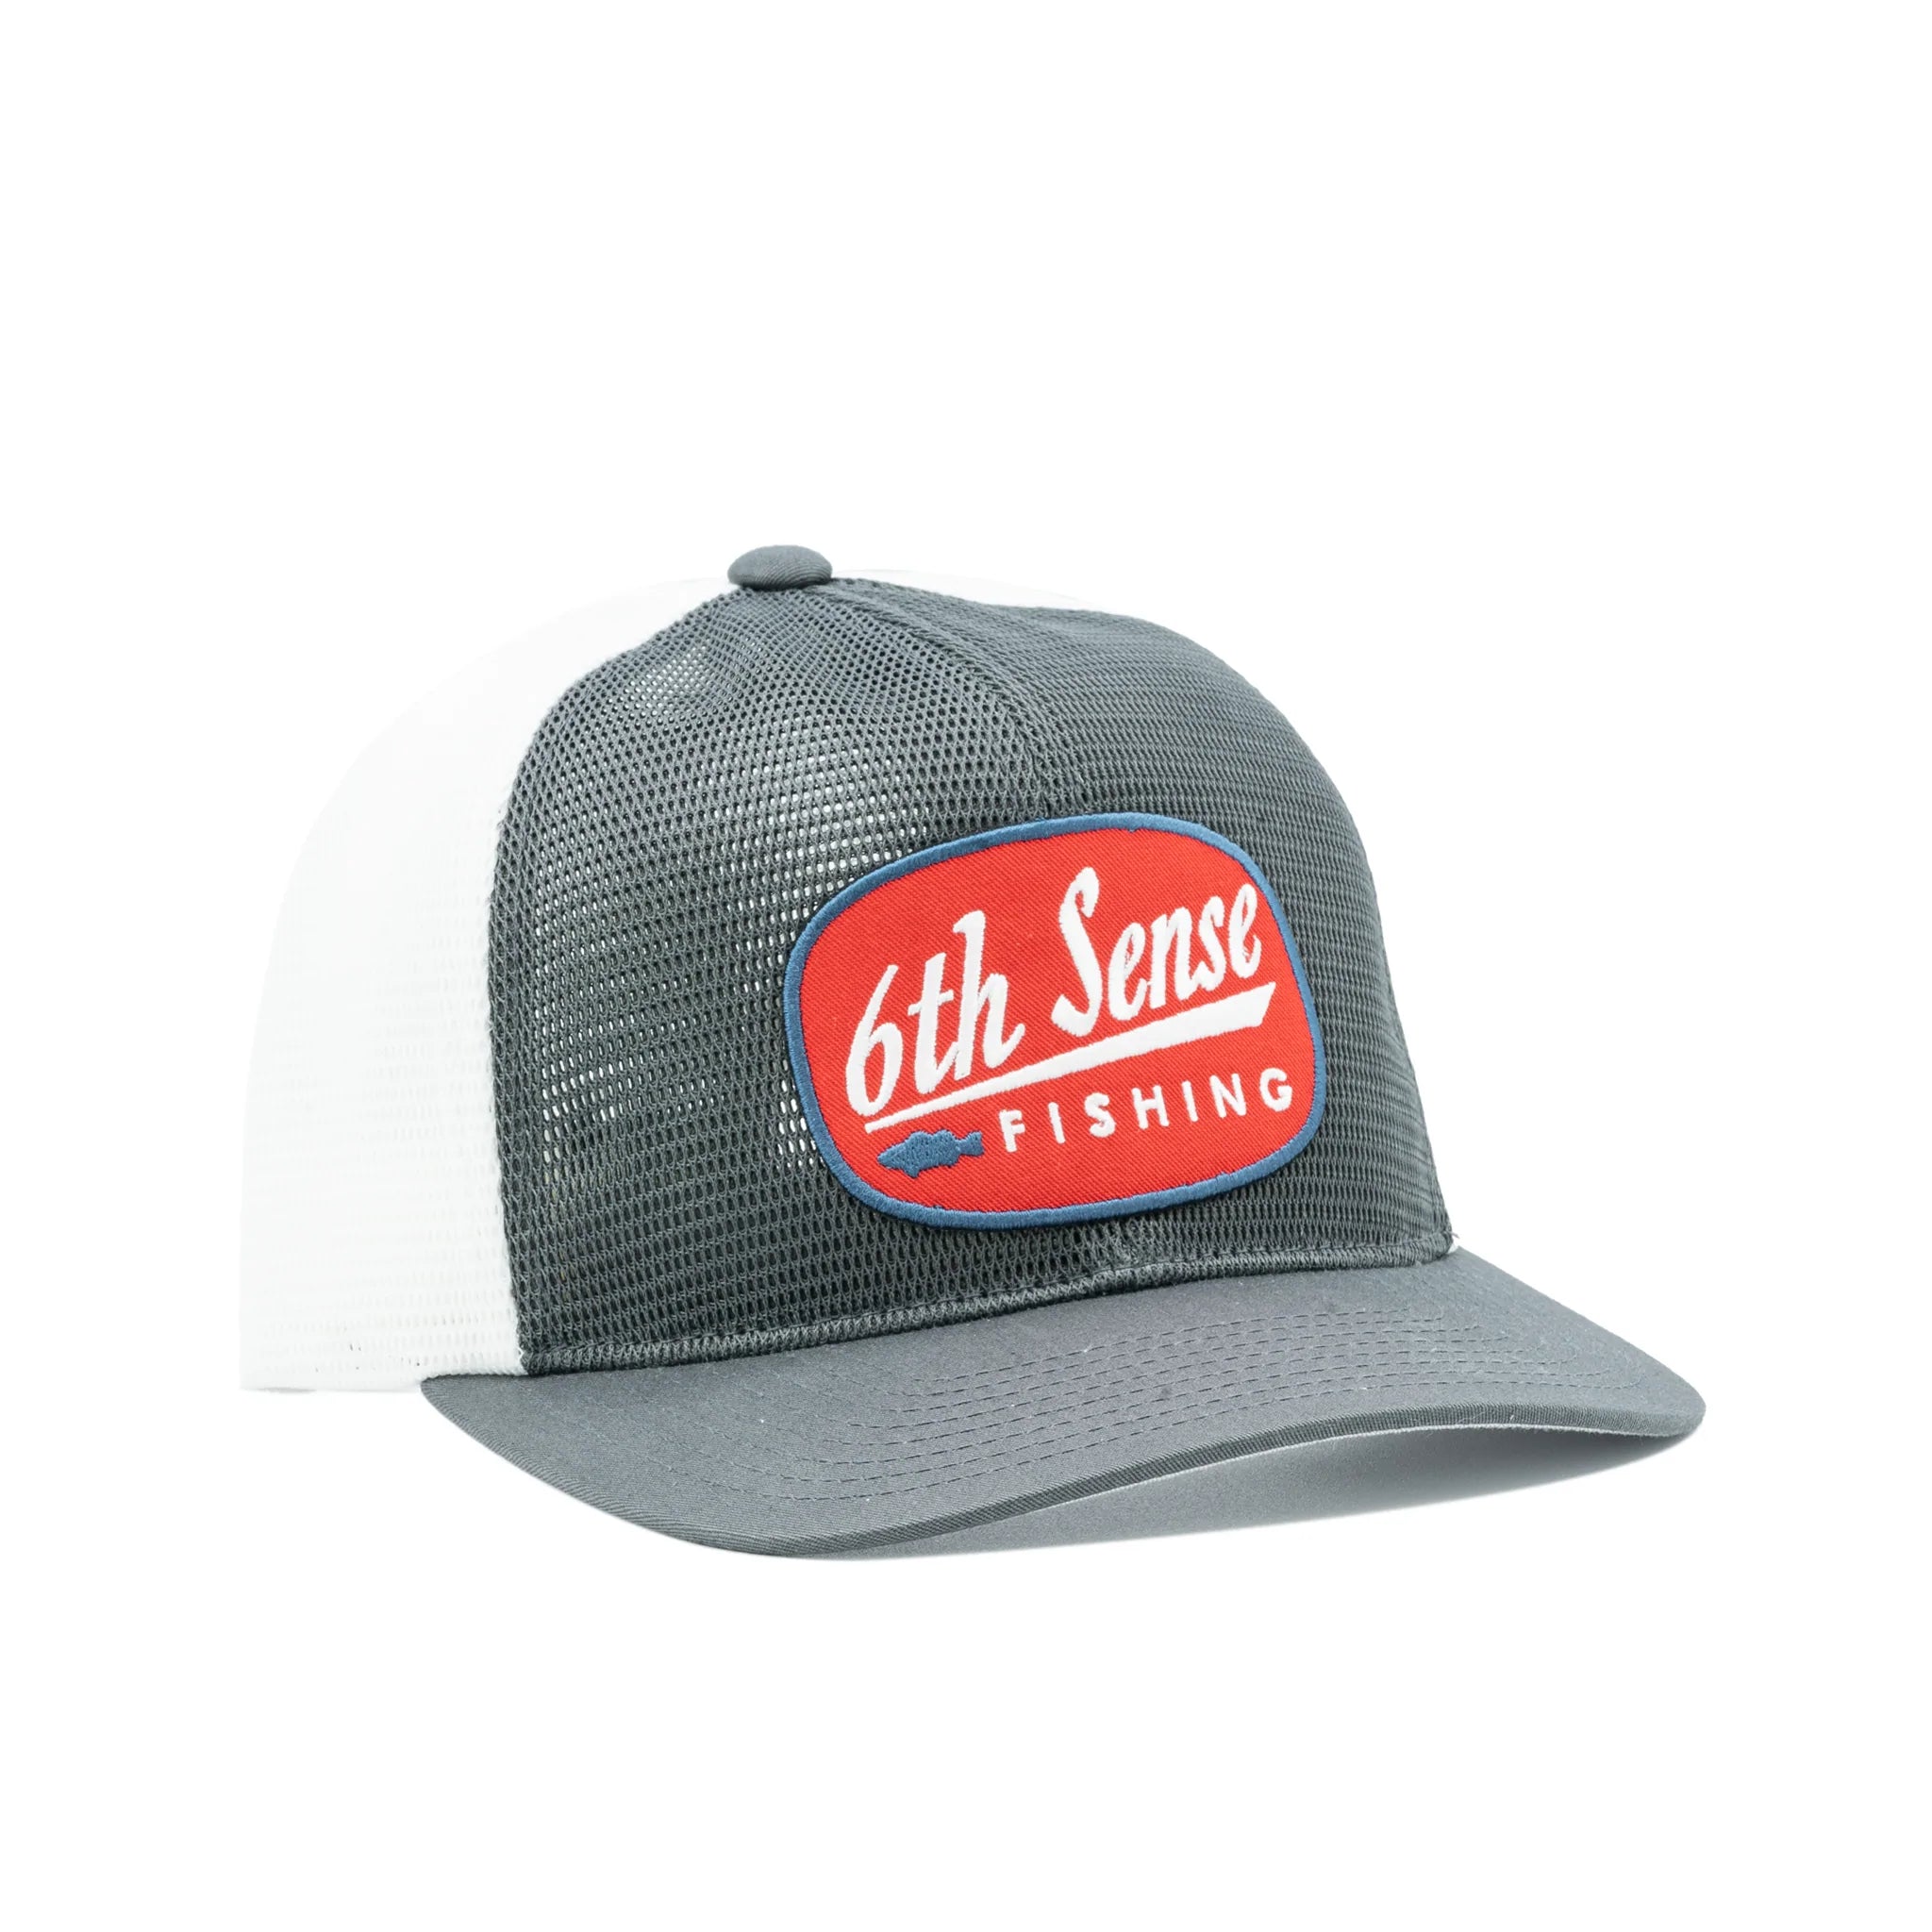 Buy red-sixer-fishlite-mesh-gray-white 6TH SENSE HATS